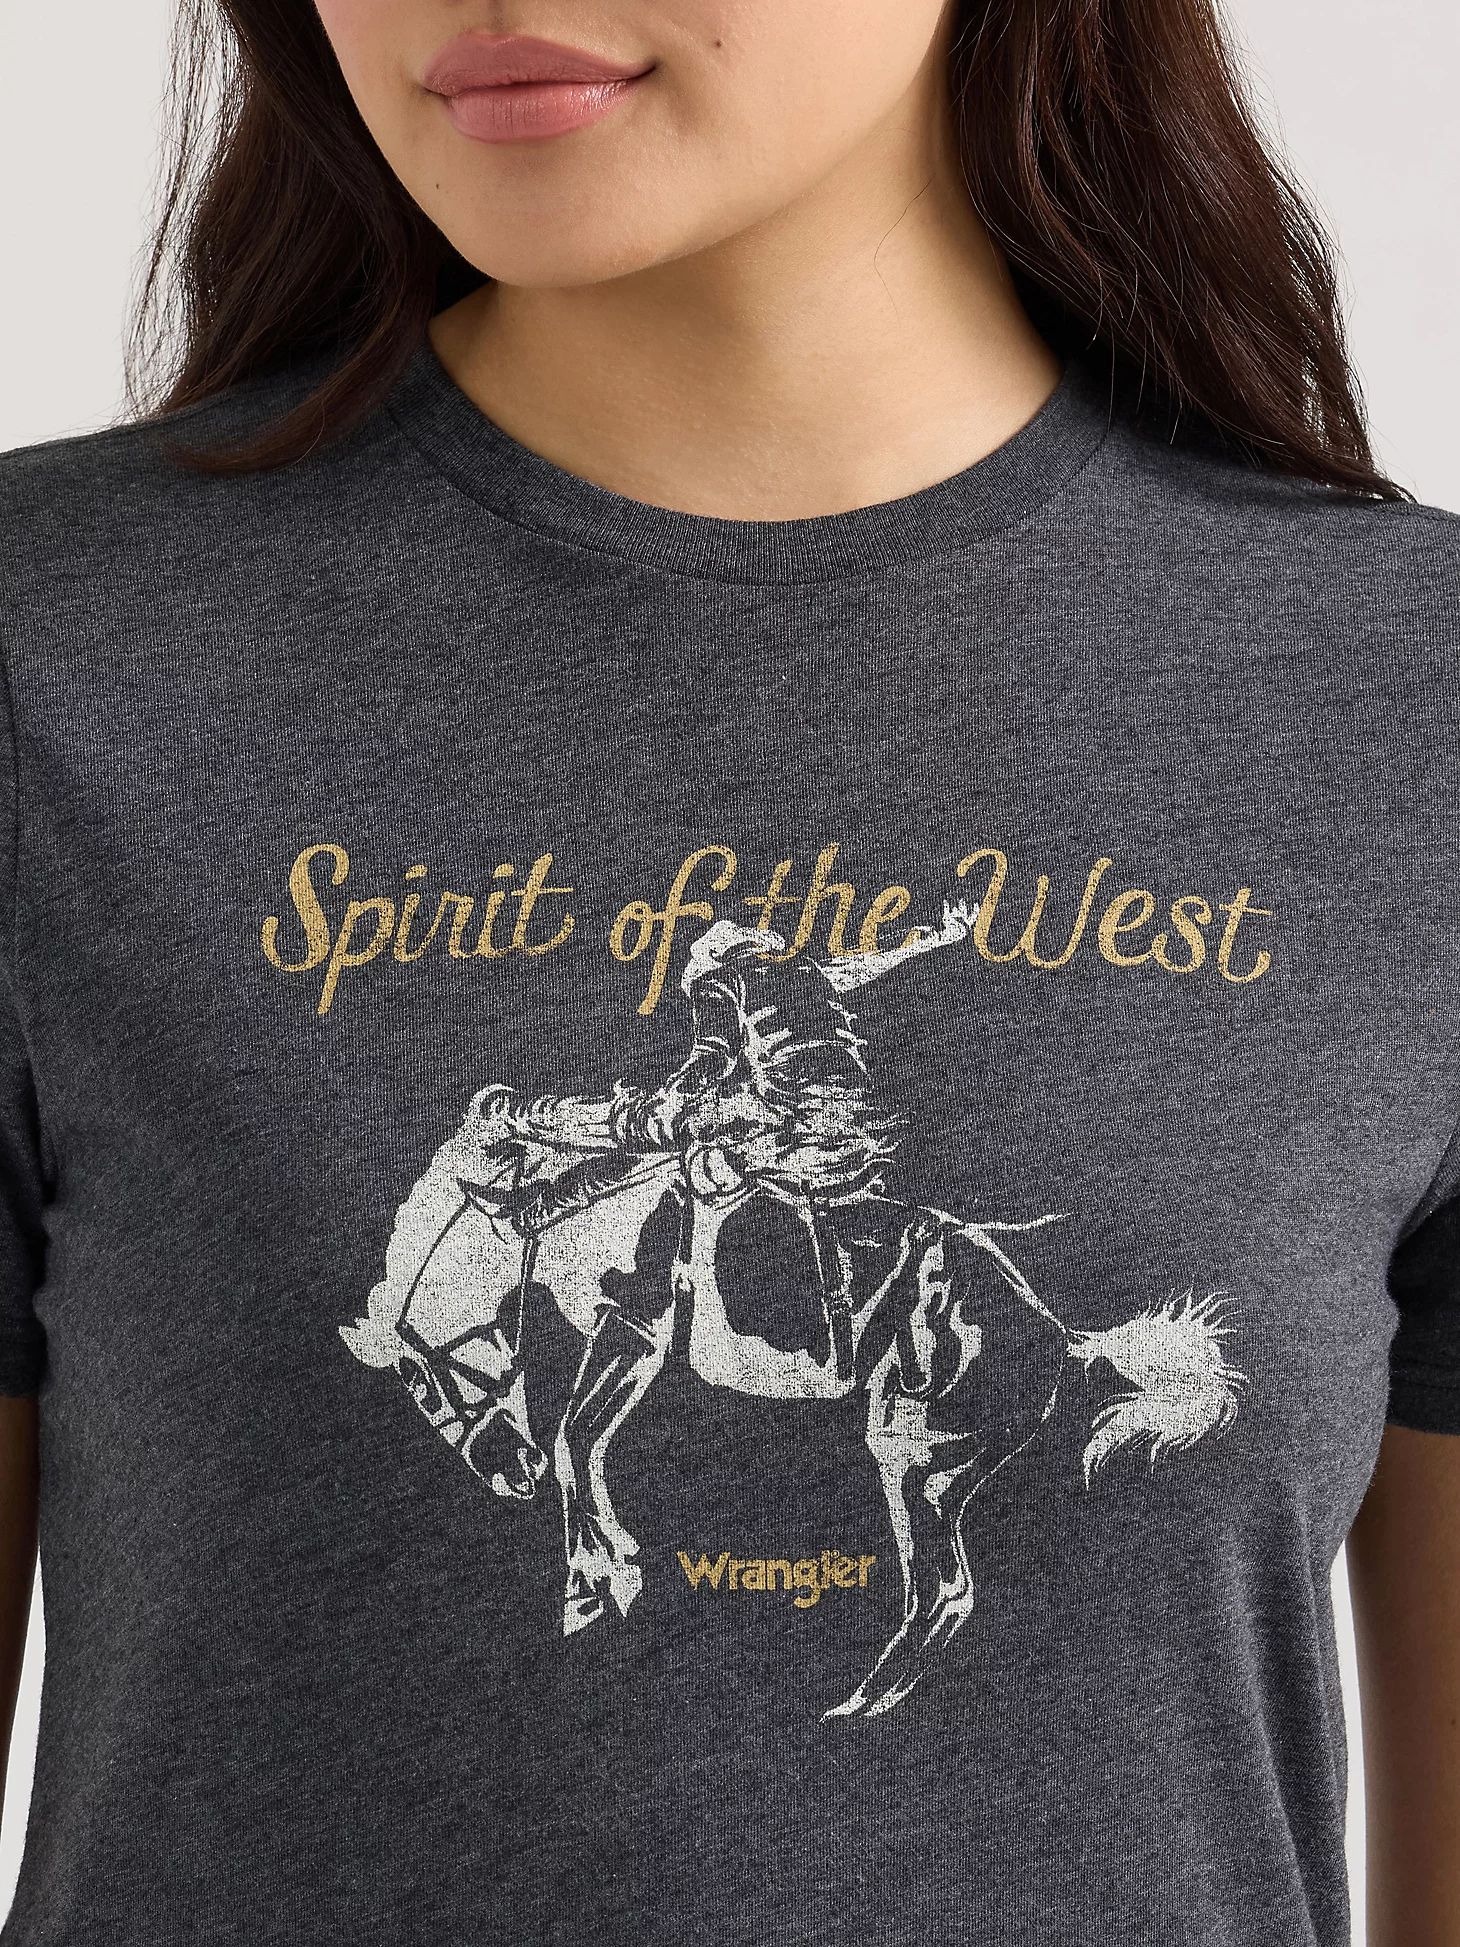 Women's Spirit of the West Tee in Jet Black | Wrangler